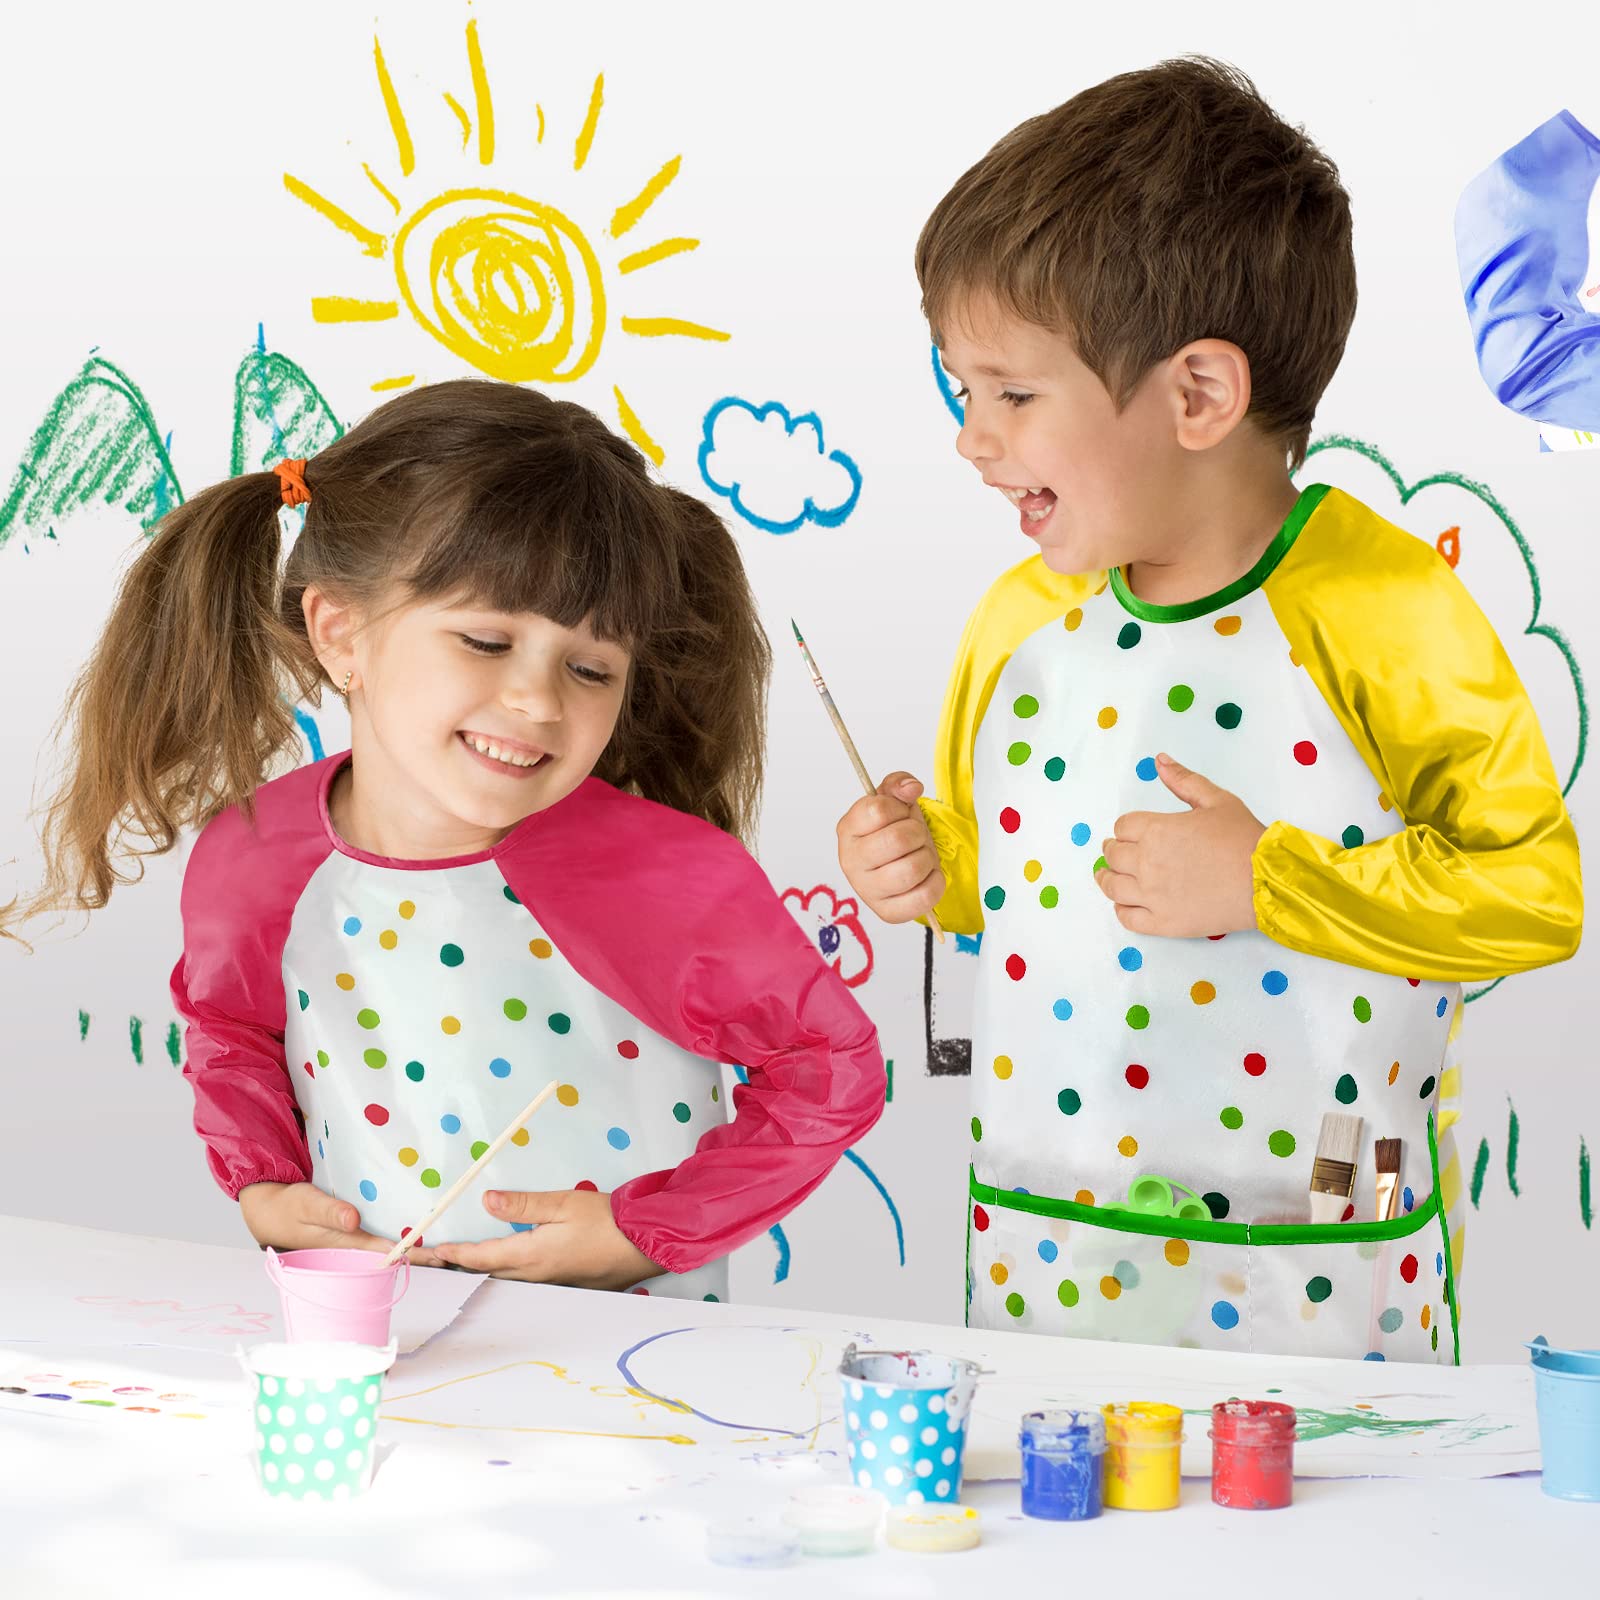 Sumyboor 2 Pack Kids Art Smocks Waterproof Kids Apron Long Sleeve with 3 Pockets for Painting, Baking, Feeding, Age 2-6 Years